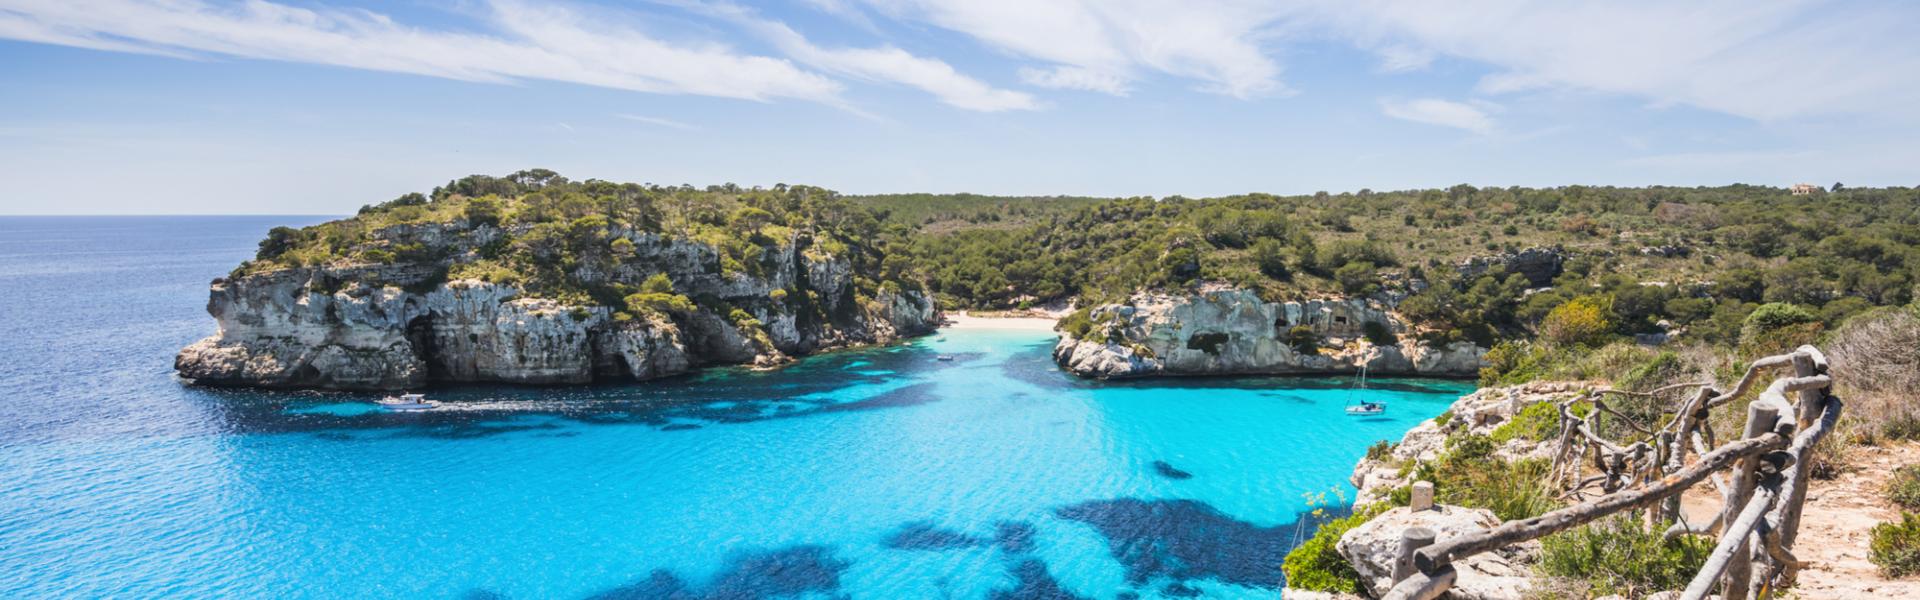 Find the perfect vacation home in Menorca - Casamundo